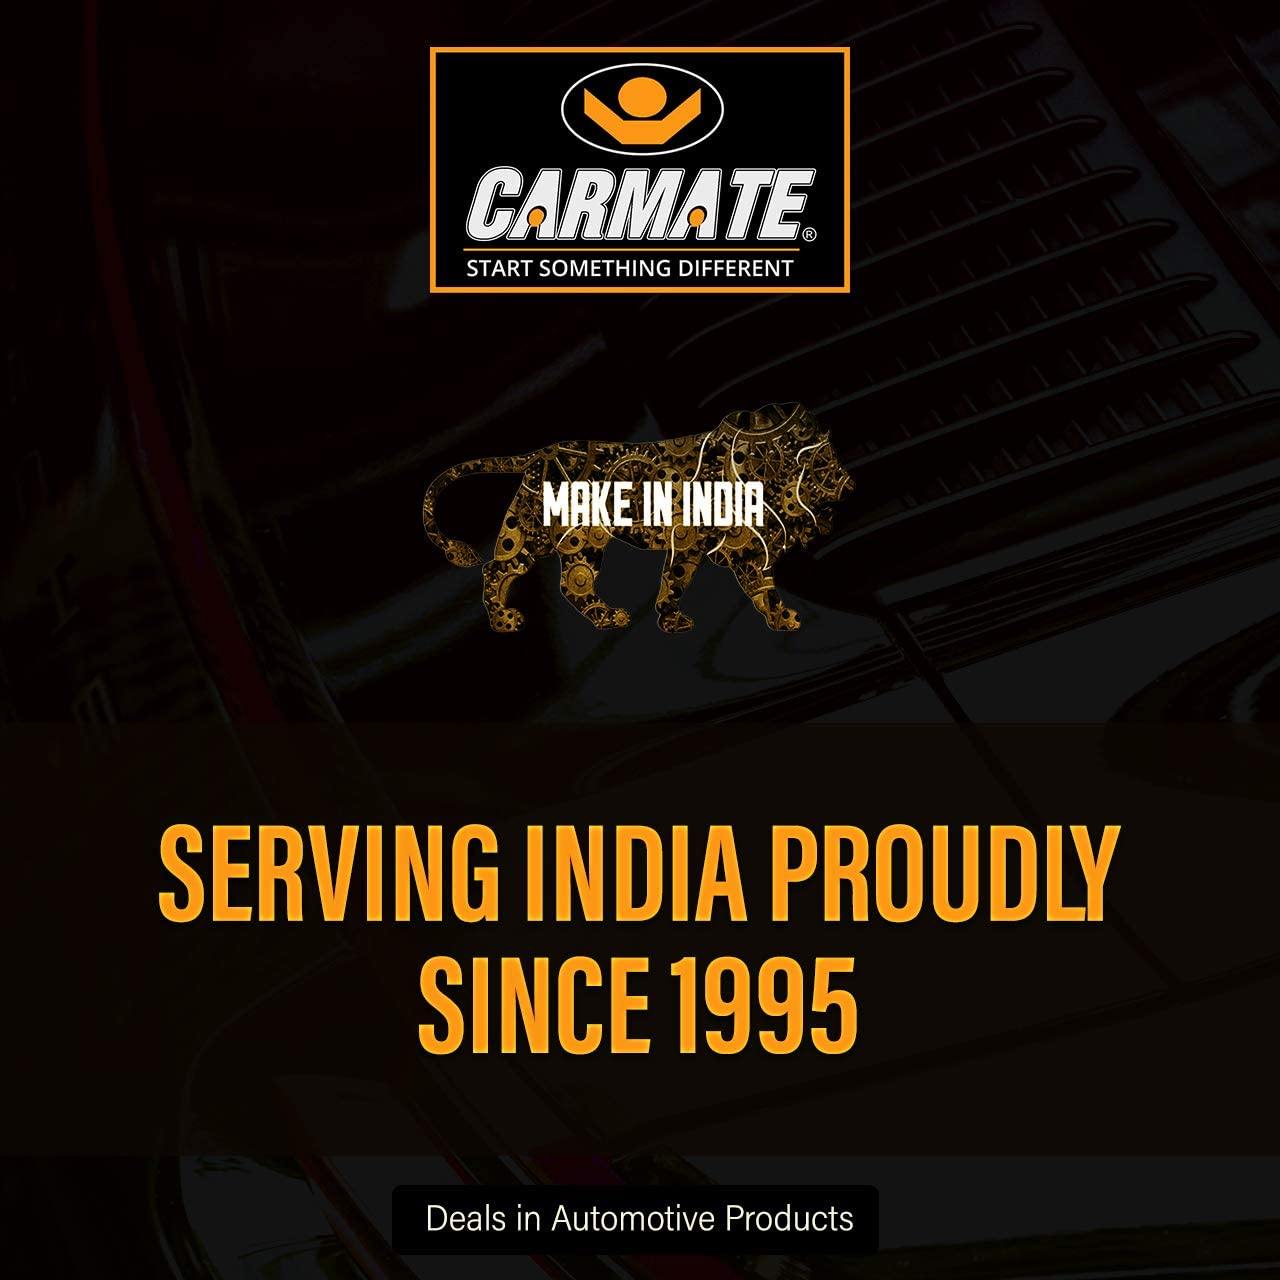 Carmate Passion Car Body Cover (Black and Orange) for Tata - Indica - CARMATE®